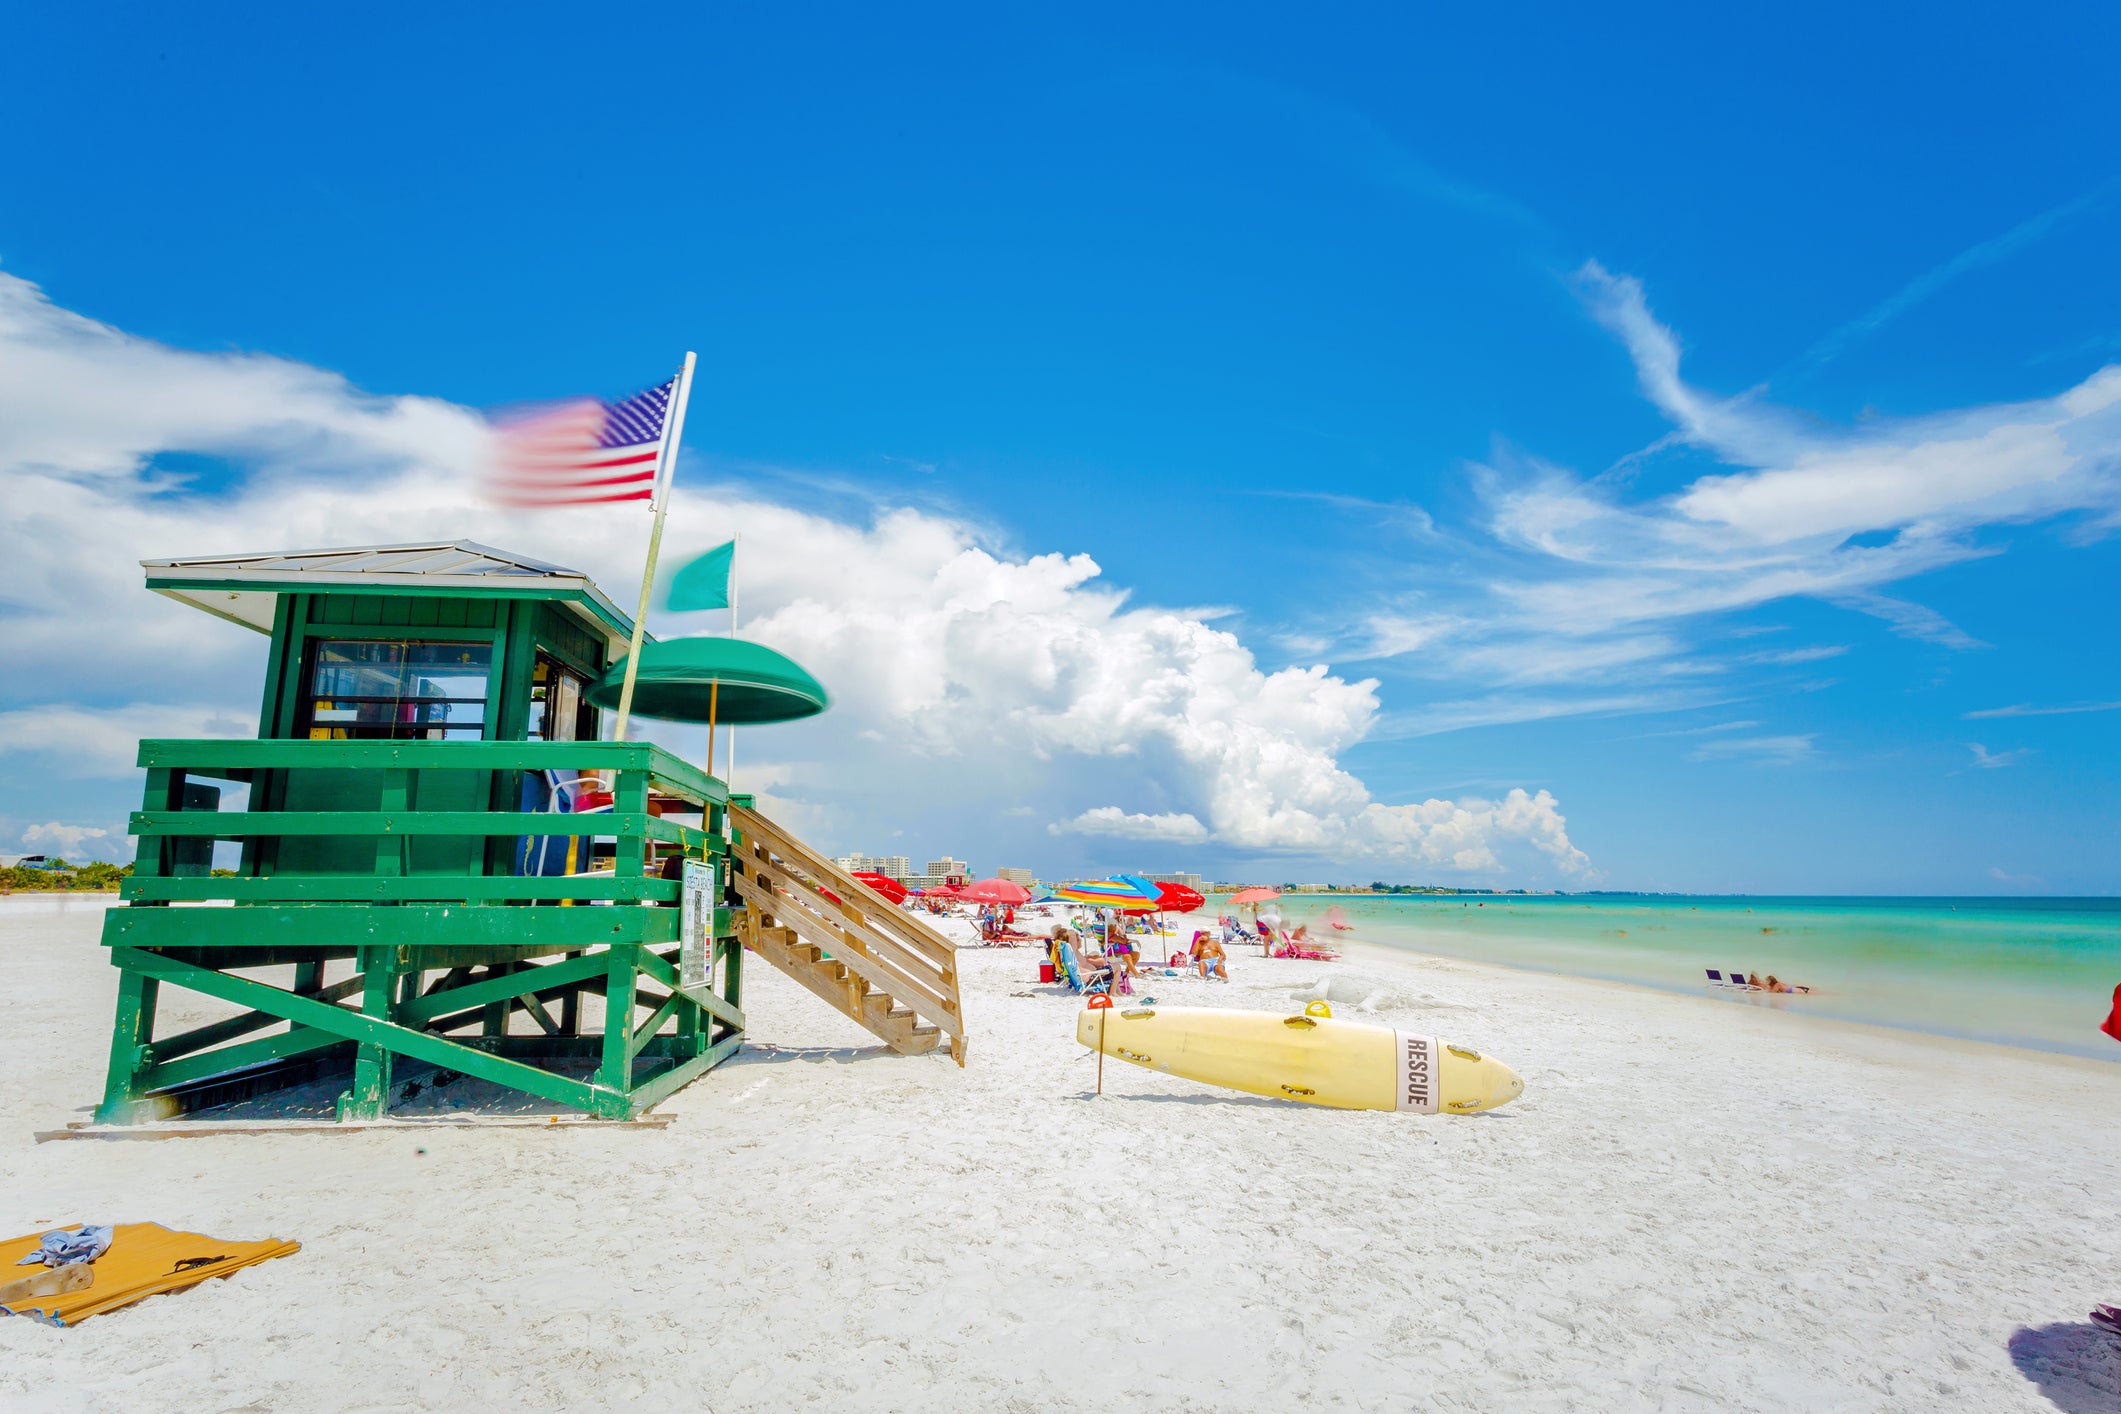 Siesta Key beach at Sarasota, Florida, USA in the Gulf of Mexico.